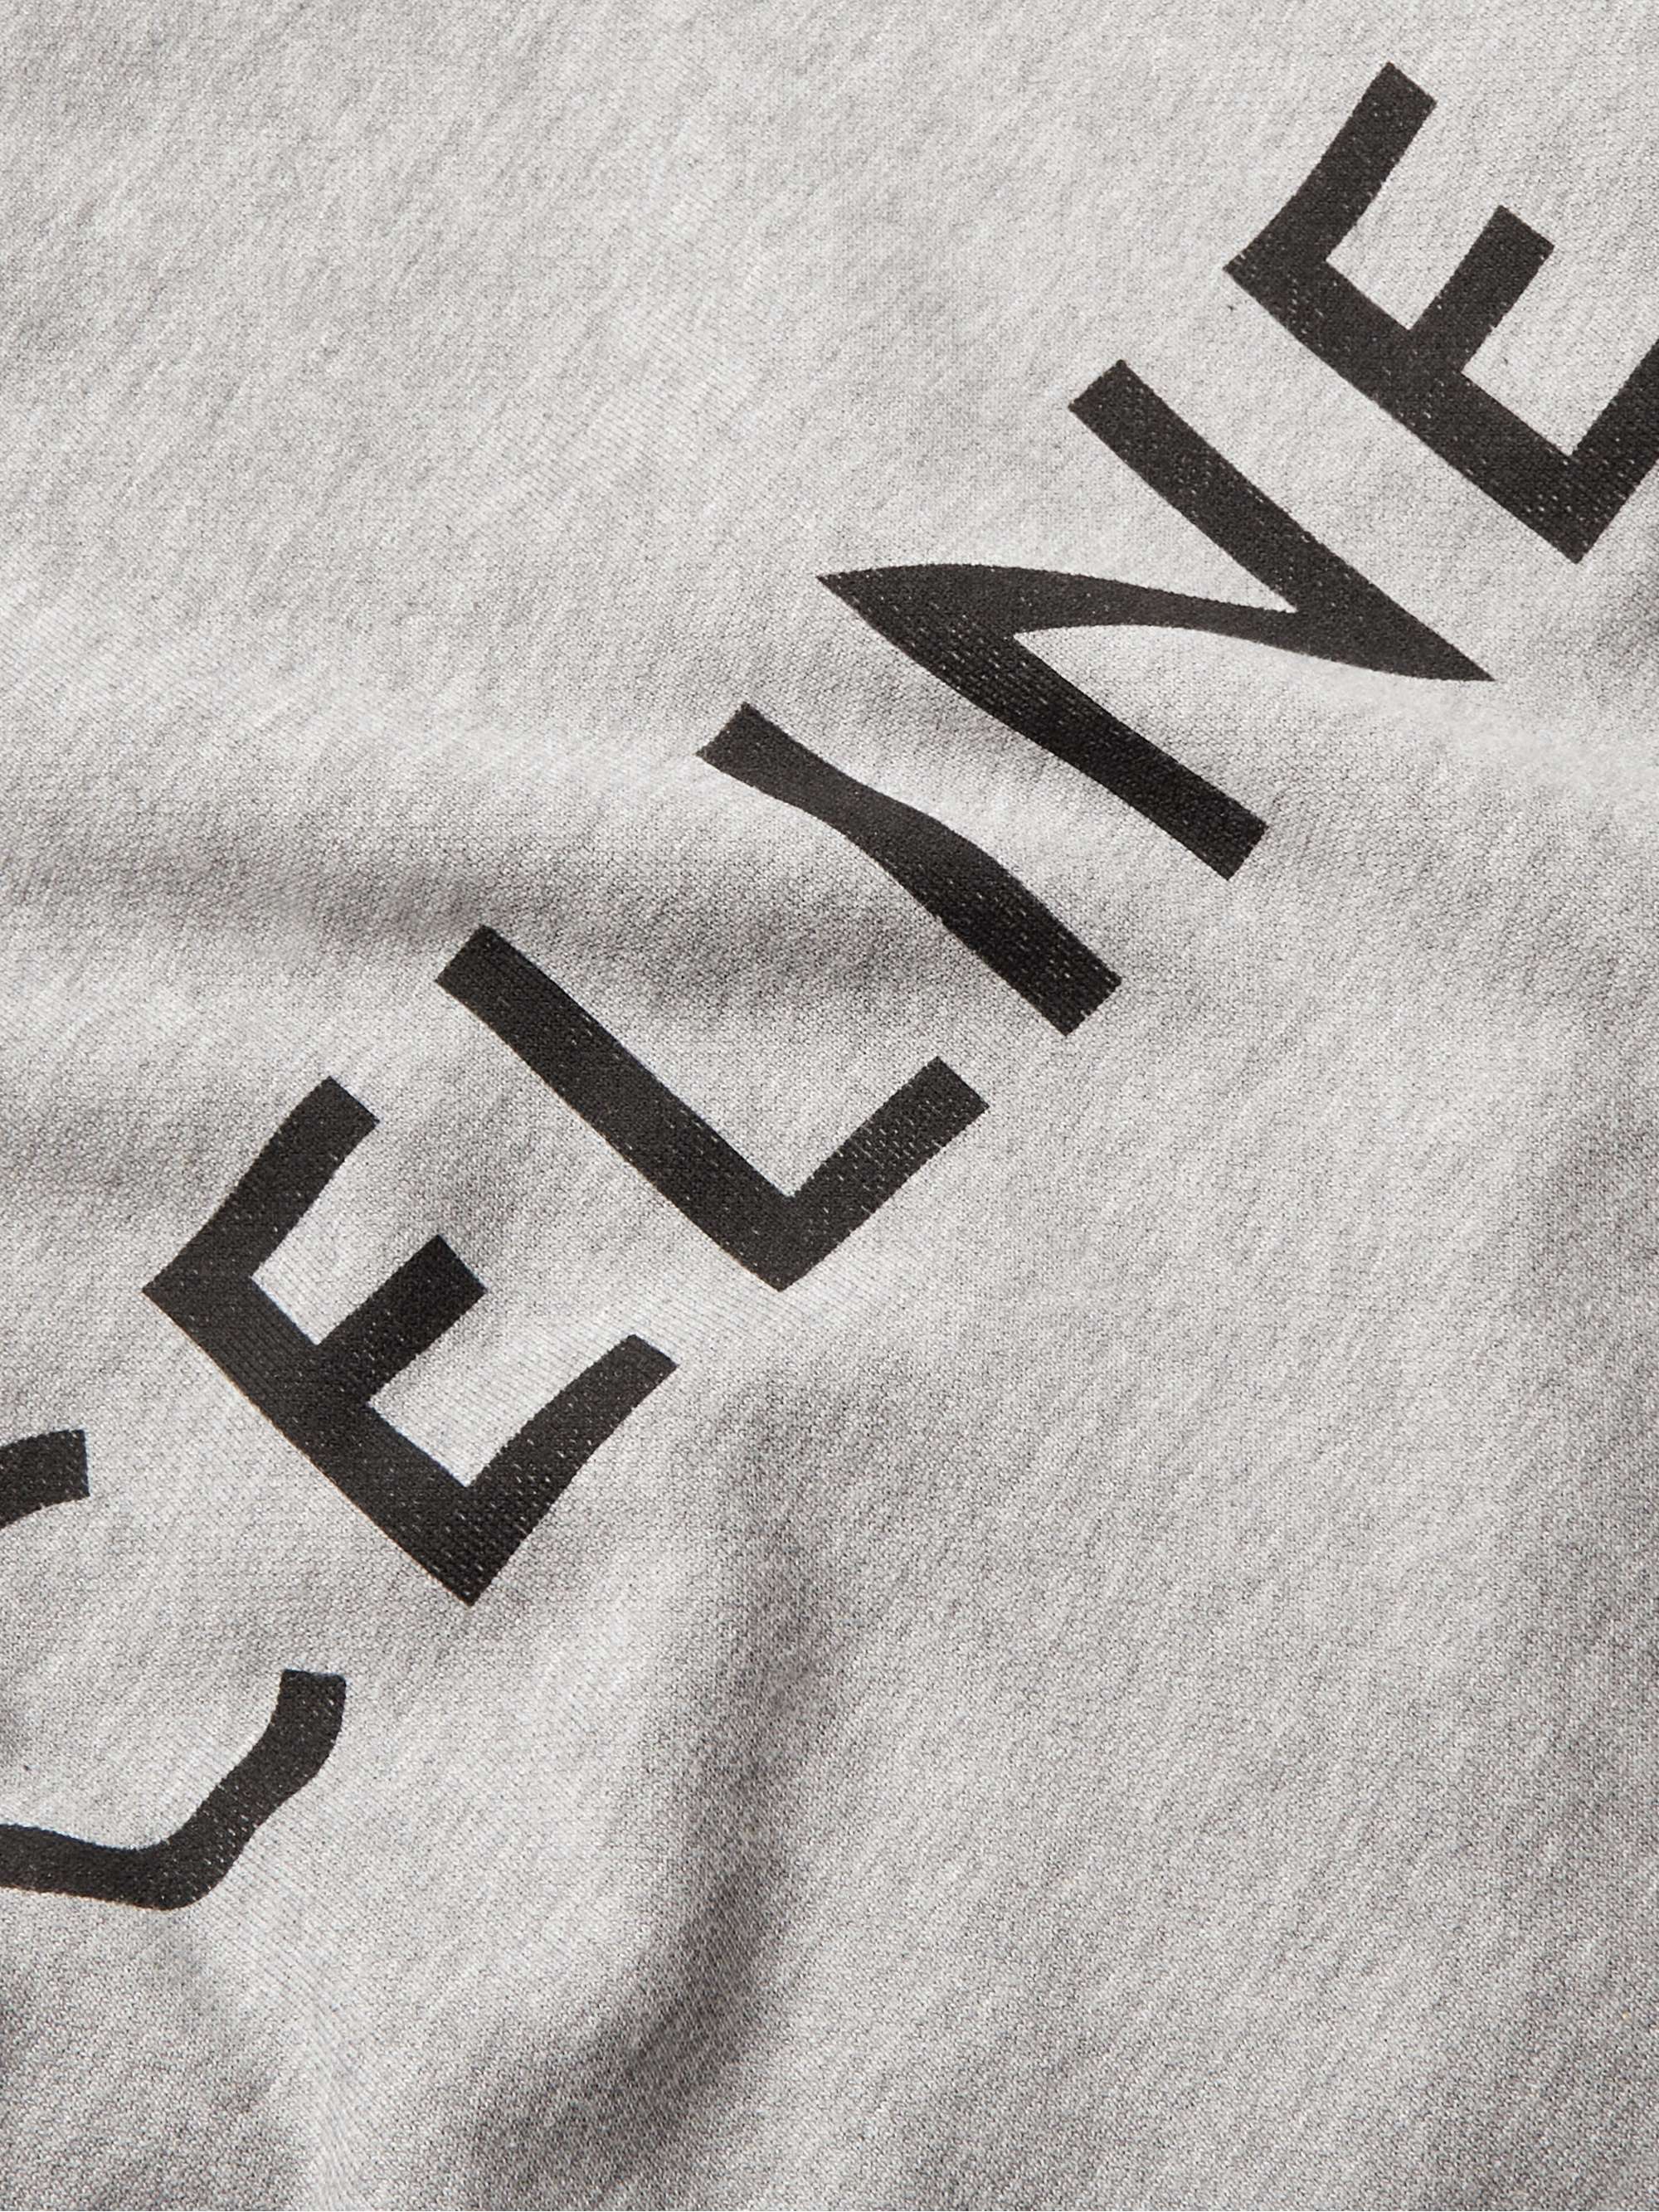 CELINE HOMME Logo-Print Stretch-Cotton Jersey Sweatshirt